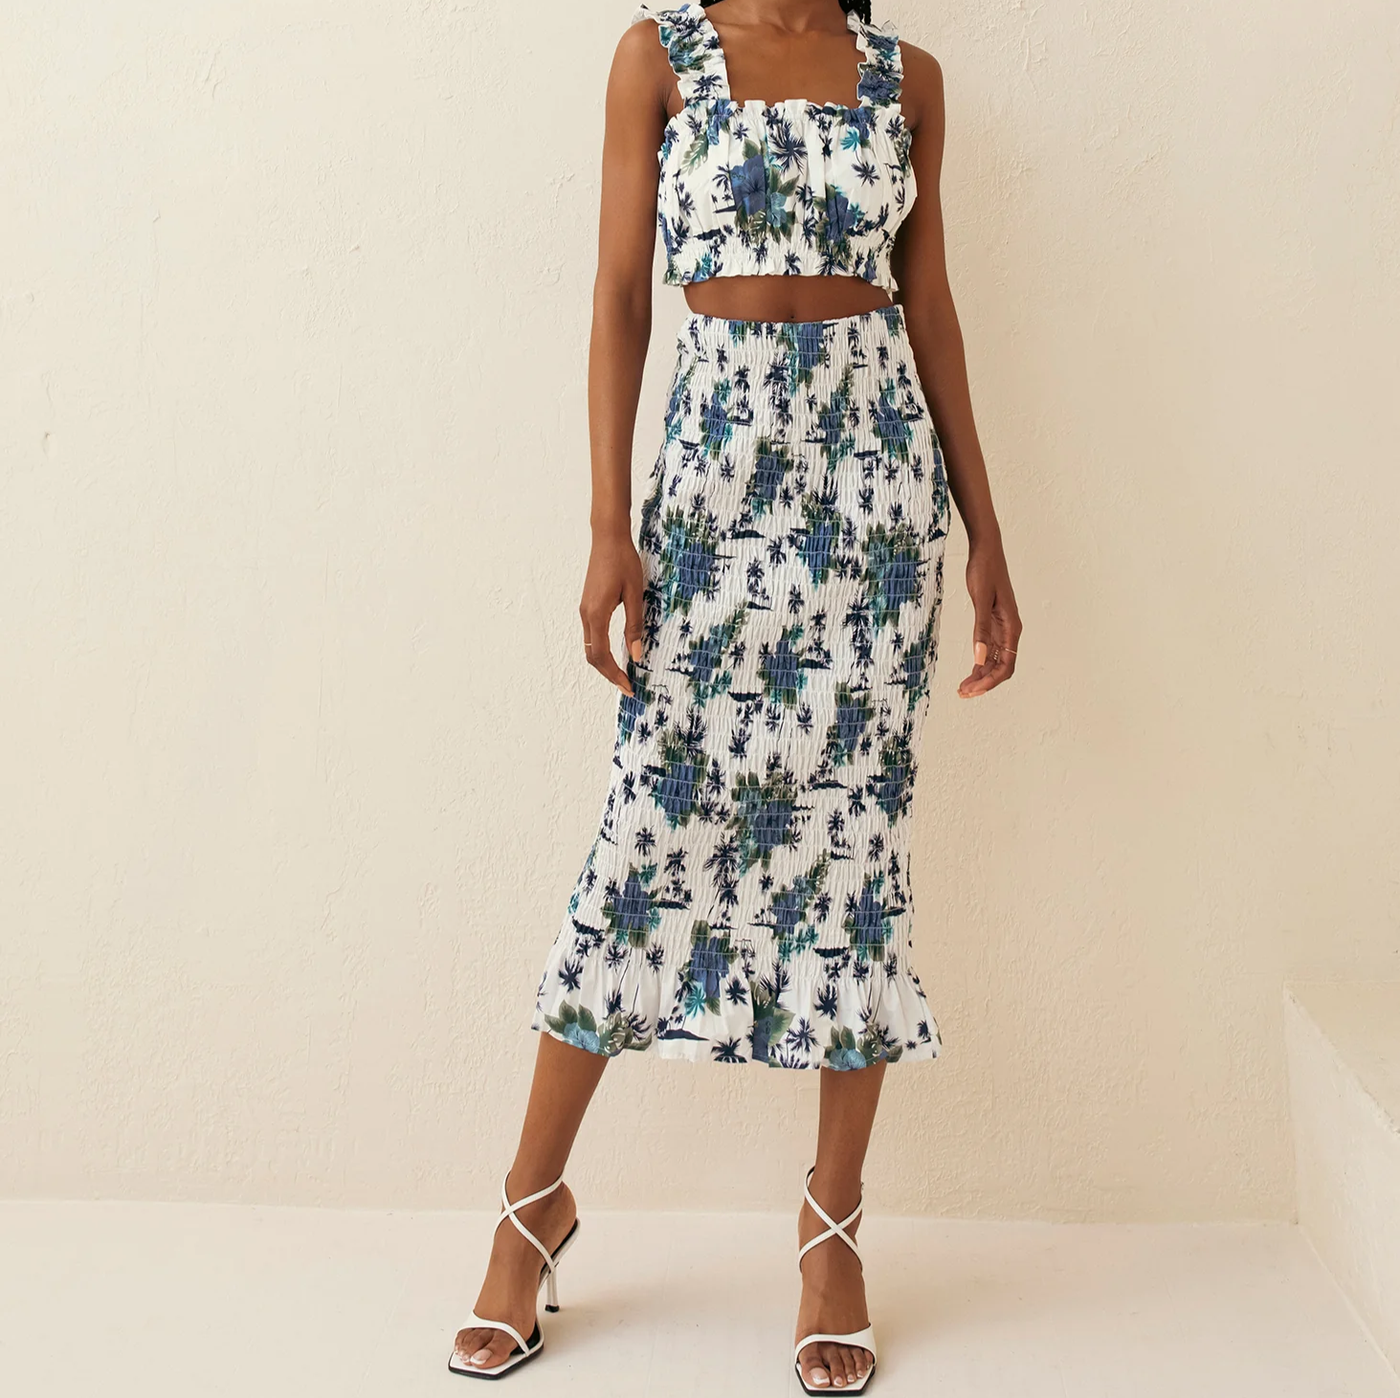 Gotstyle Fashion - Hilary MacMillan Skirts Ruched Floral Print Midi Skirt - Multi